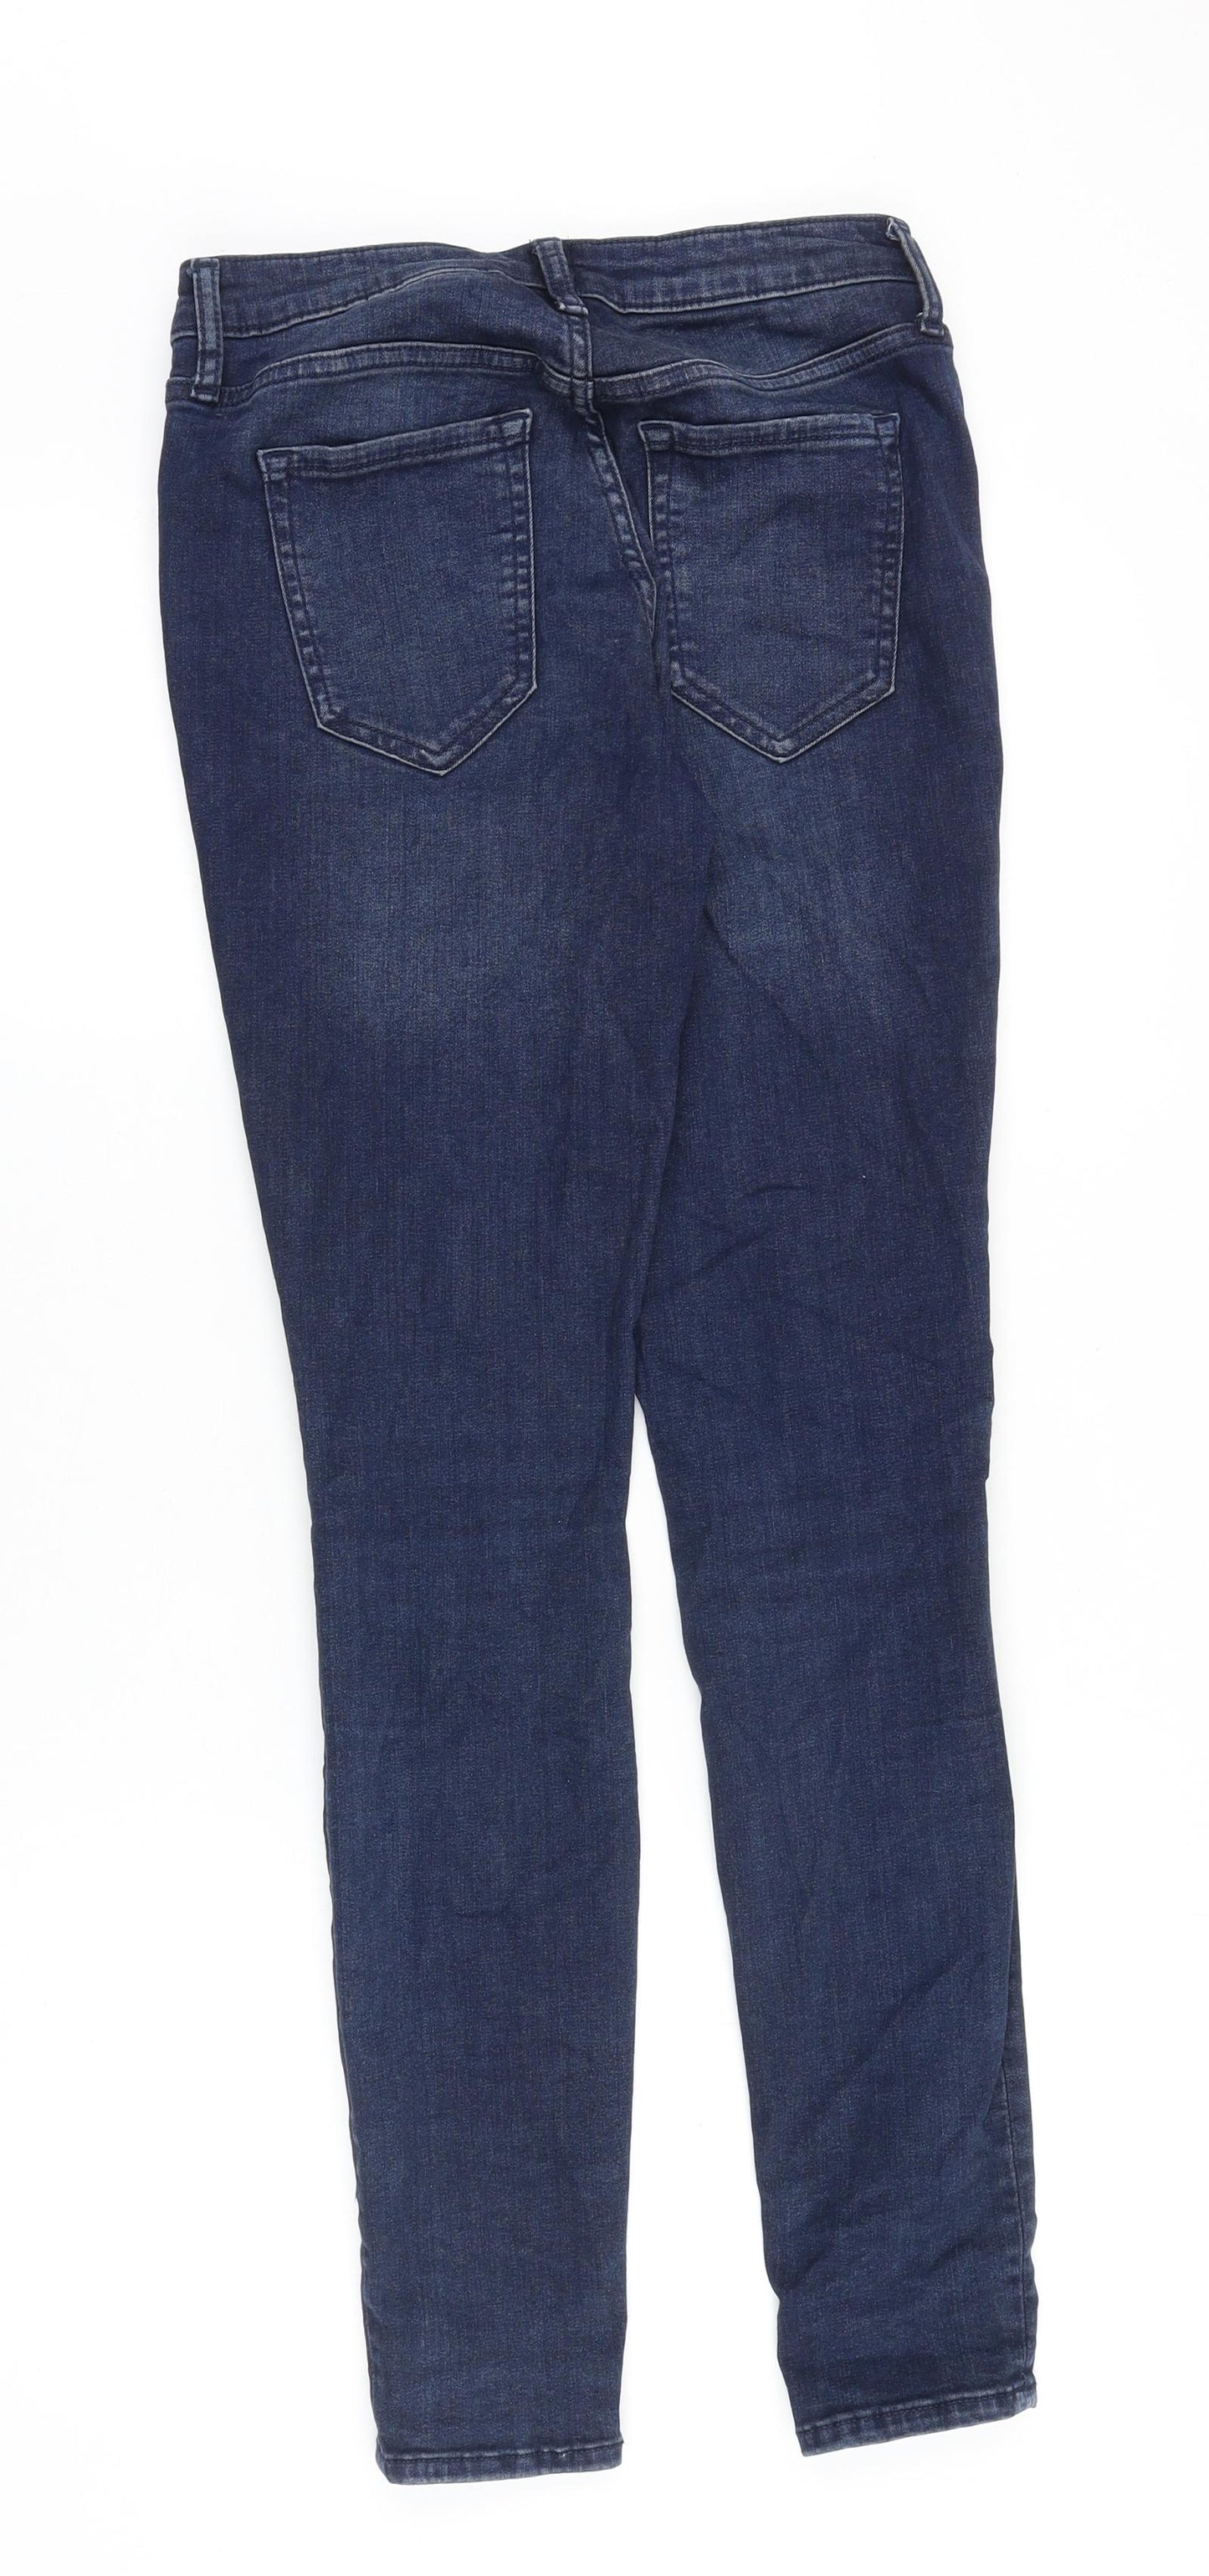 Gap Mens Blue Cotton Skinny Jeans Size 26 in Regular Zip